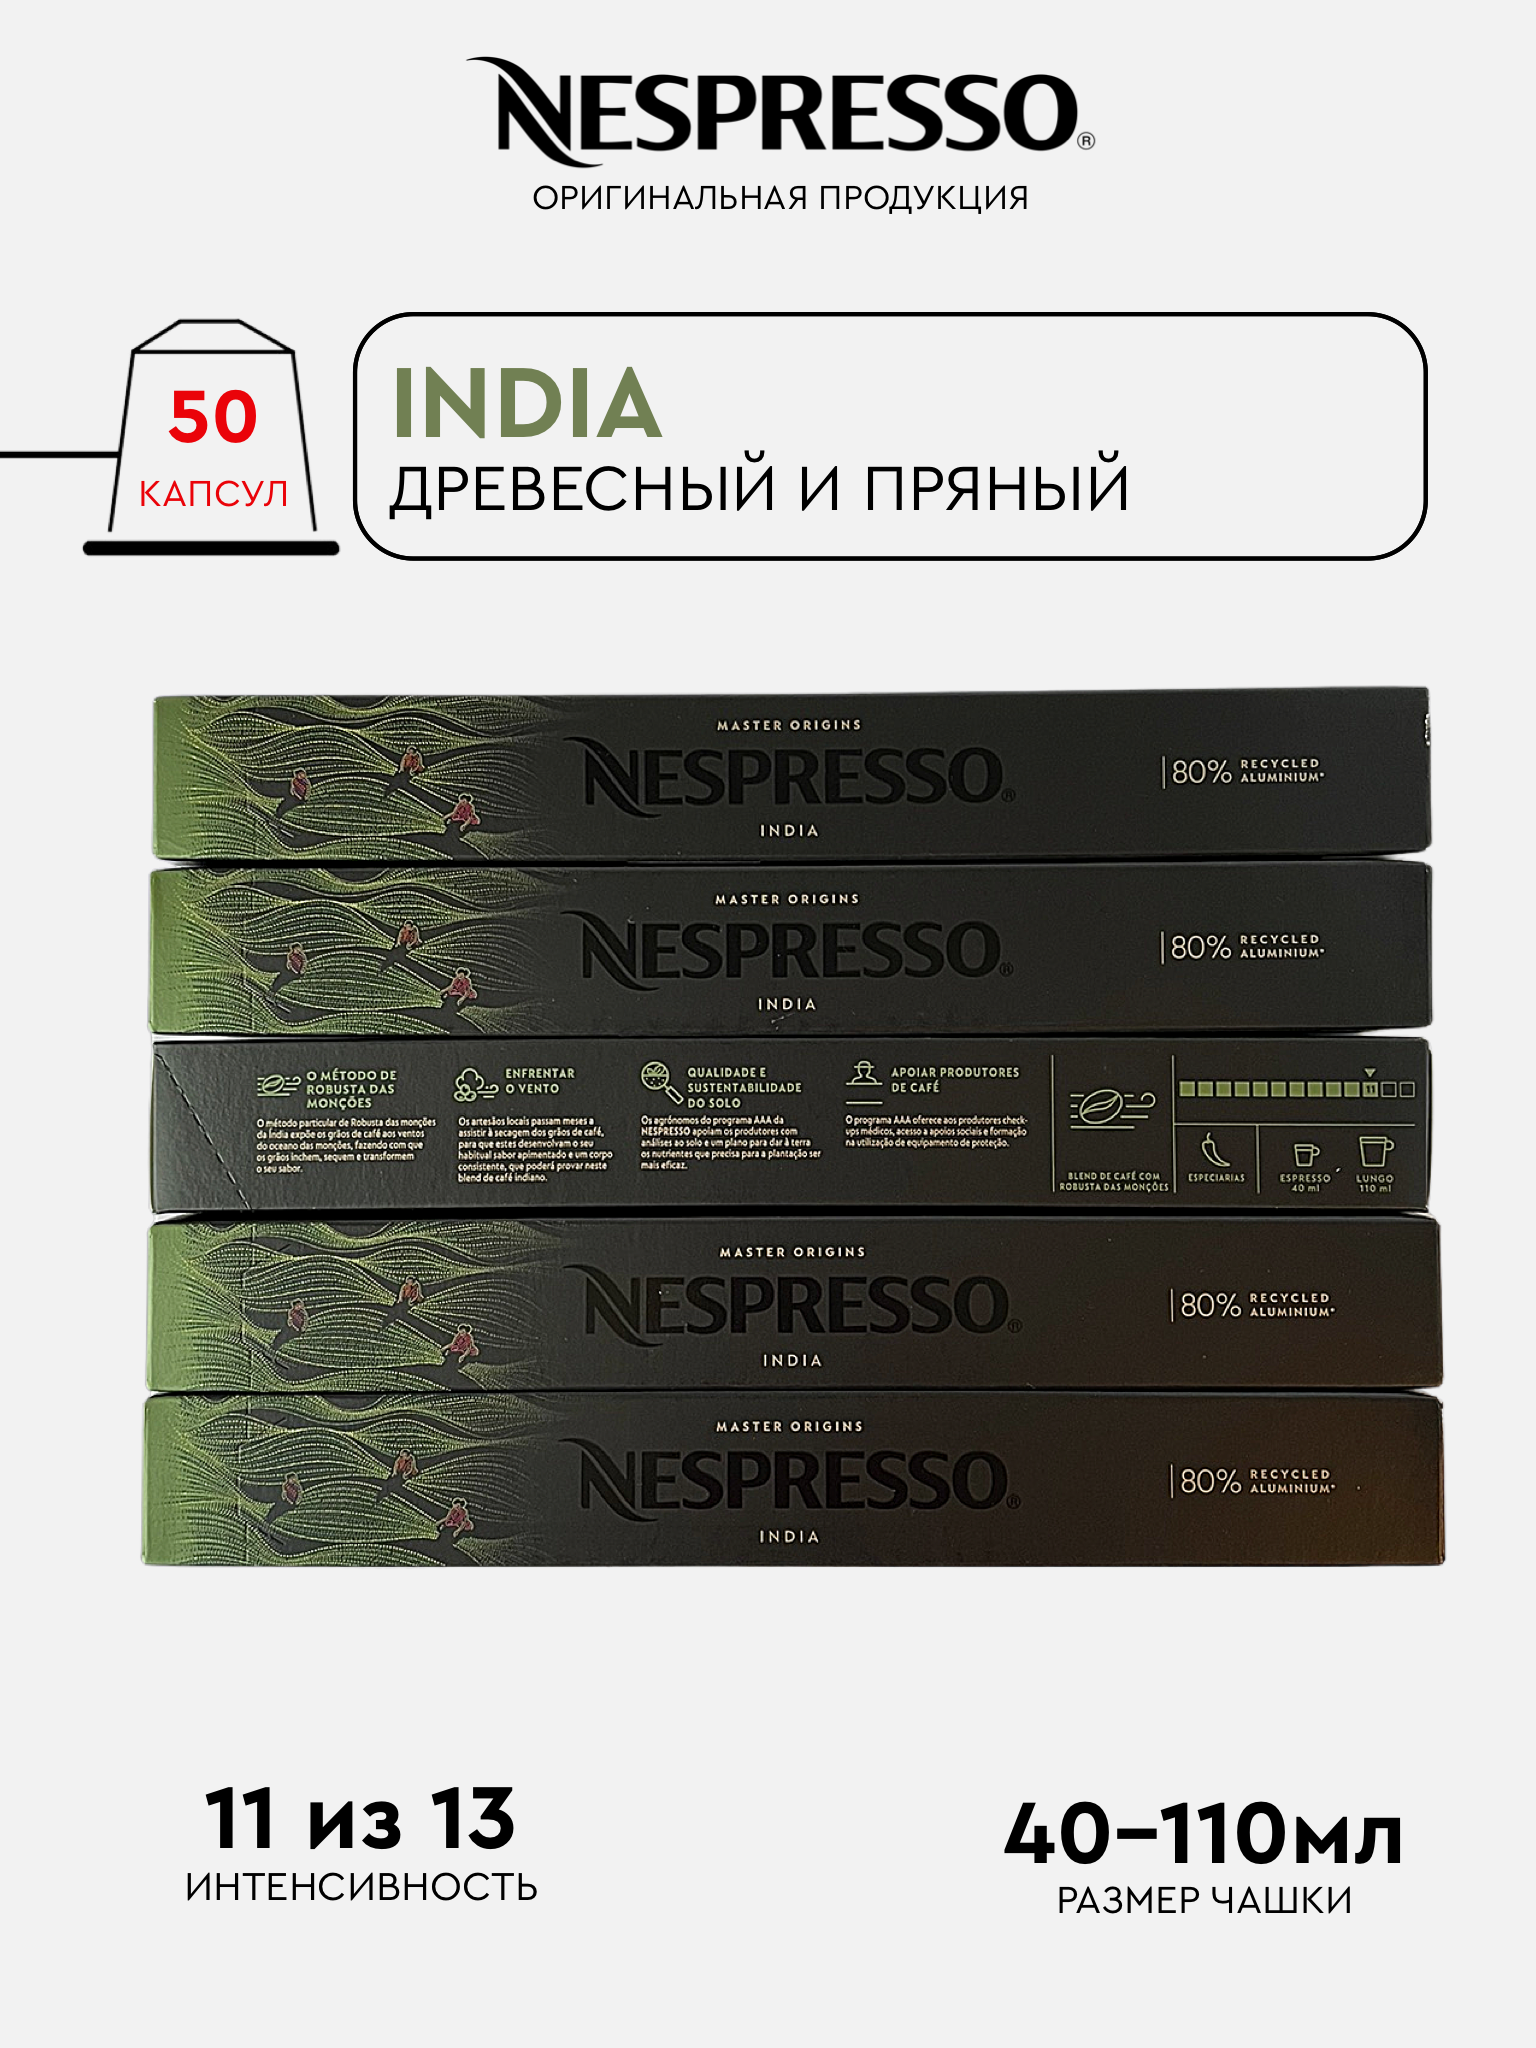 Капсулы Nespresso India для кофемашины Nespresso Original, 50 капсул